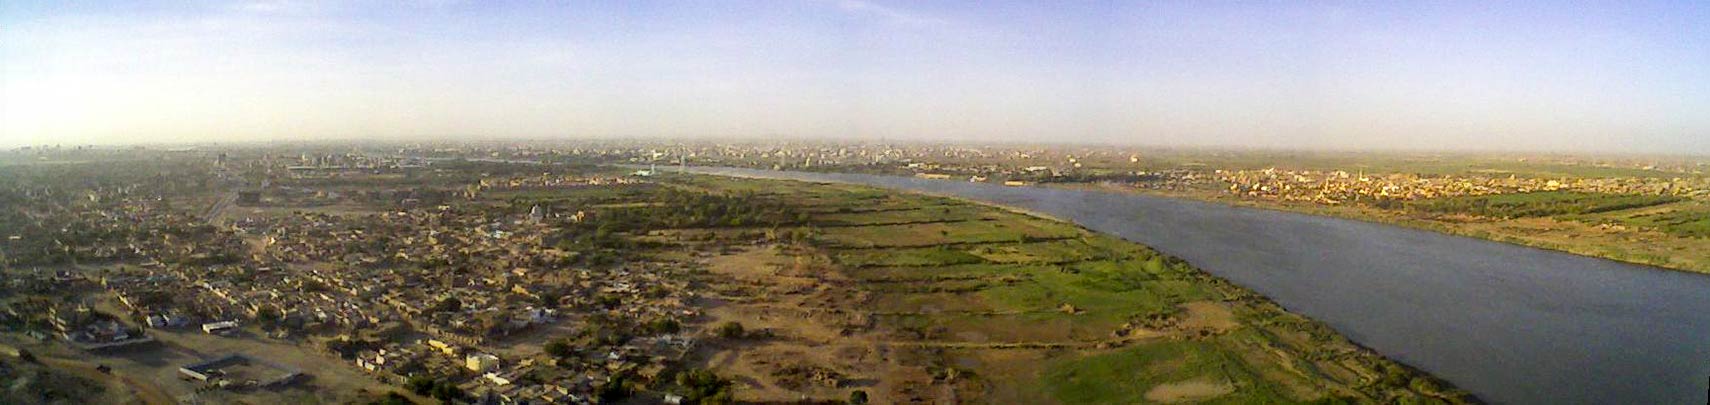 Panorama of Karthoum at the river Nile